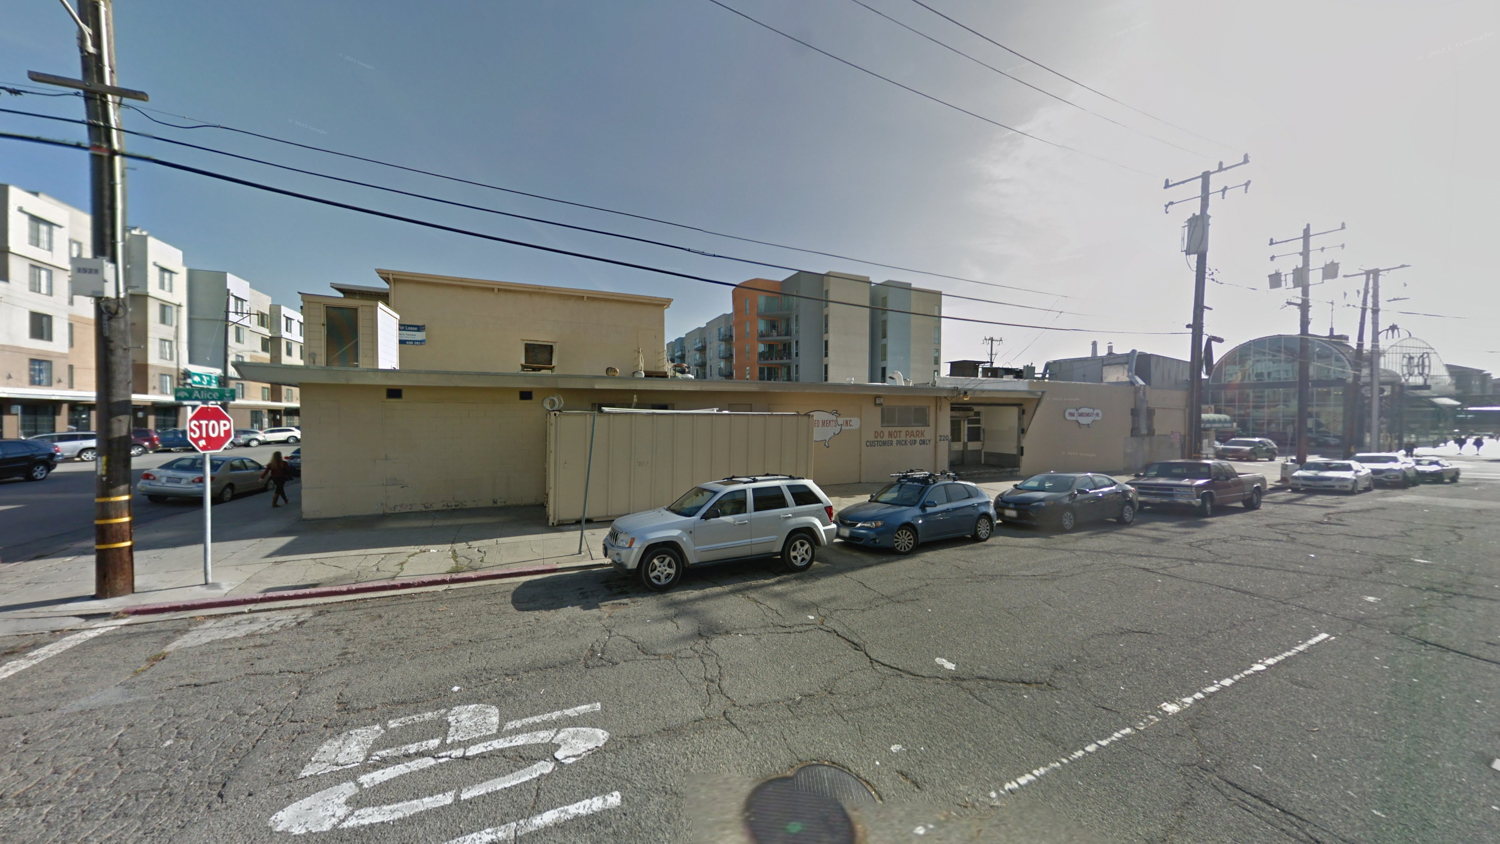 200-220 Alice Street existing building, image via Google Street View